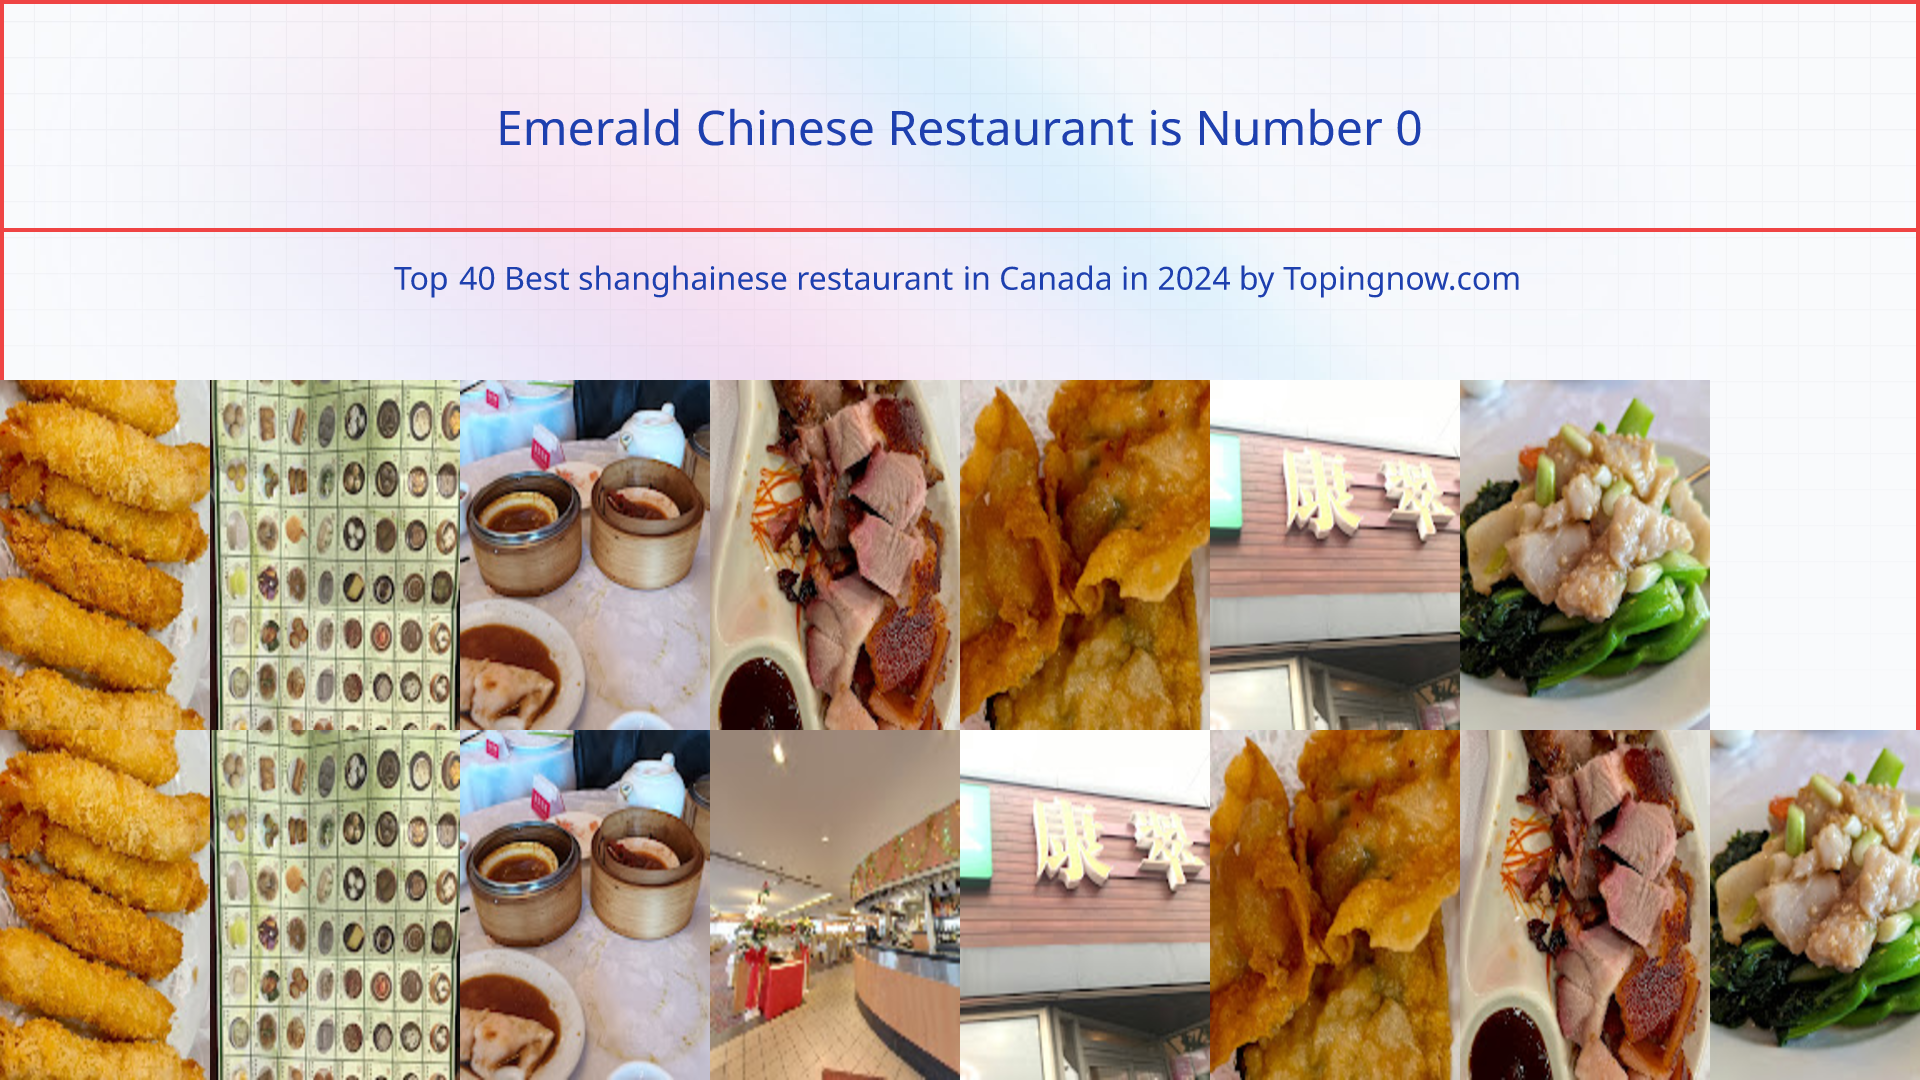 Emerald Chinese Restaurant: Top 40 Best shanghainese restaurant in Canada in 2024